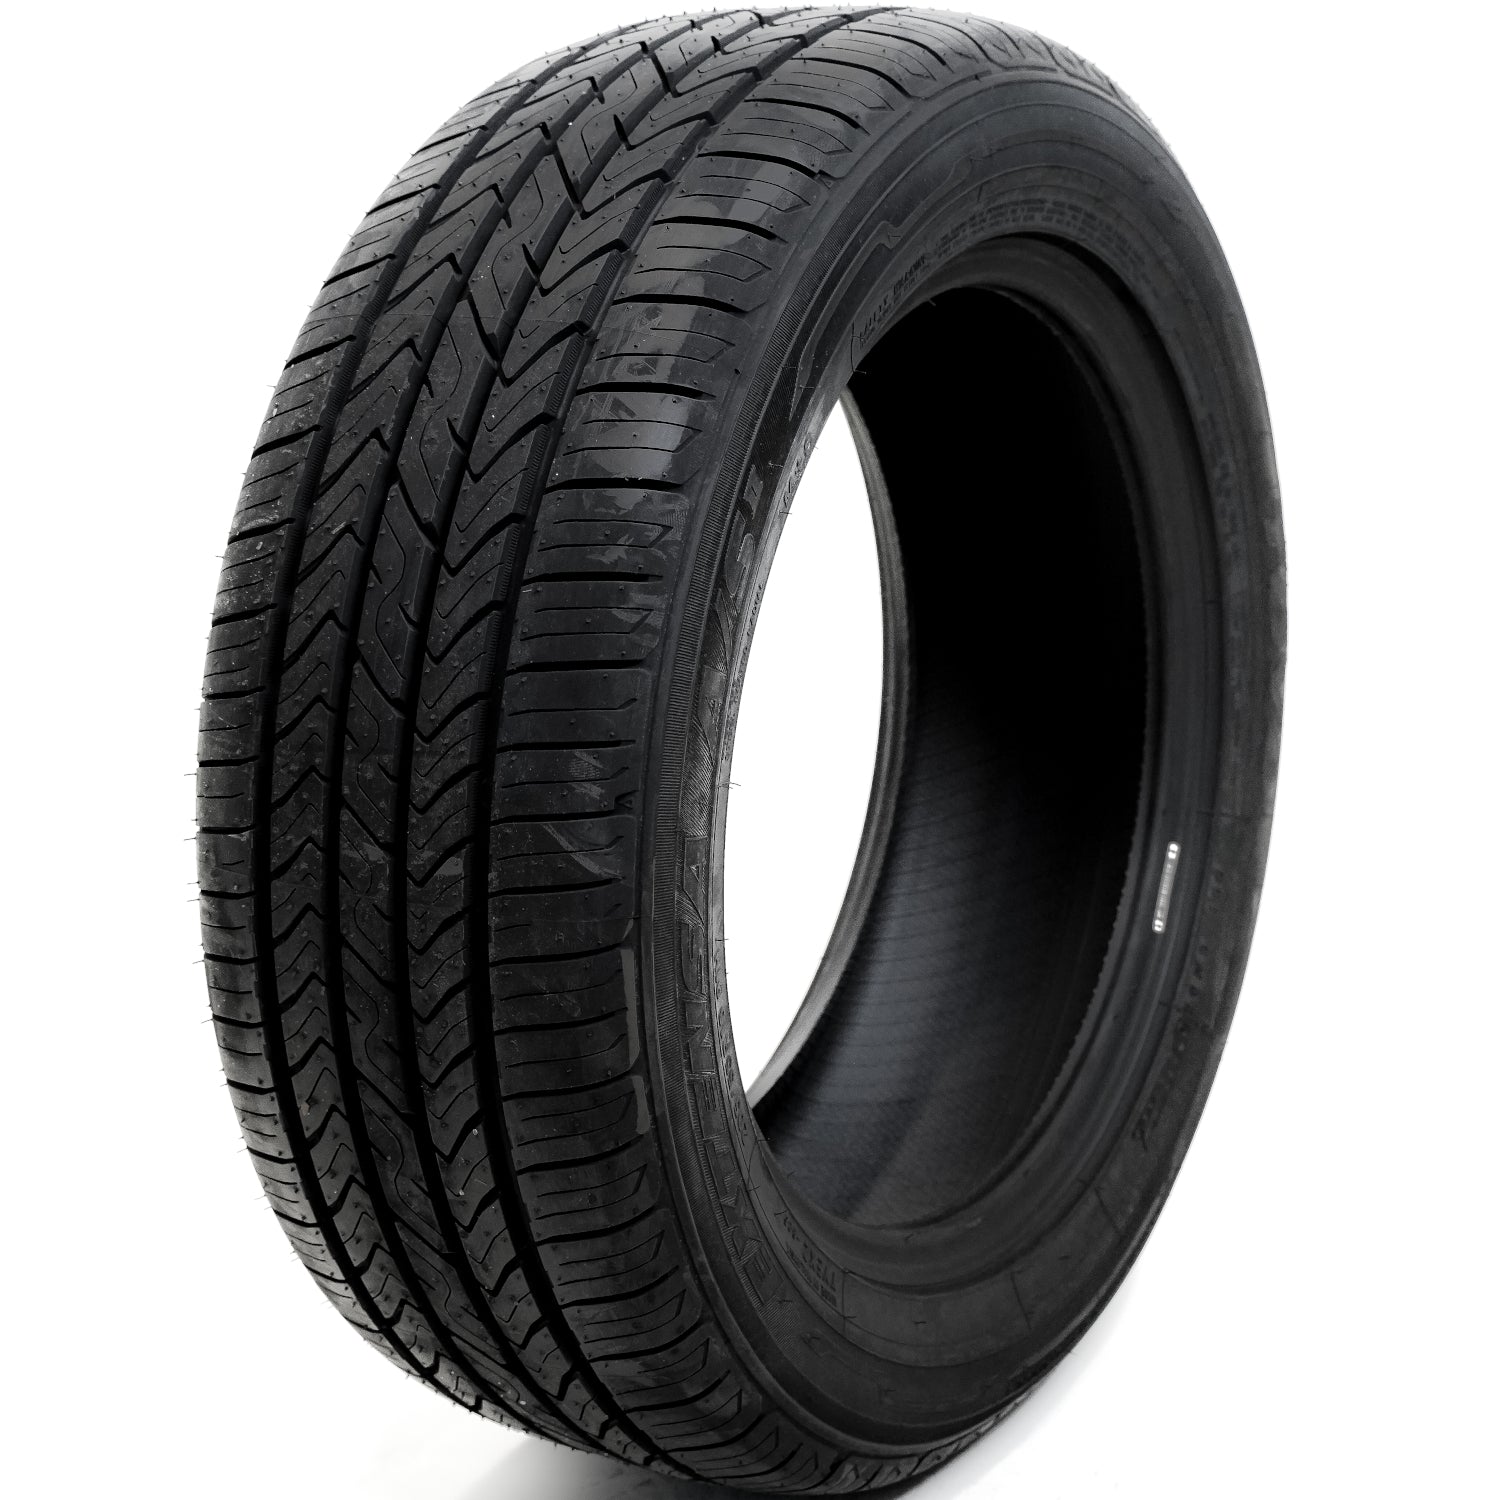 TOYO TIRES EXTENSA A/S II 215/65R16 (27X8.5R 16) Tires